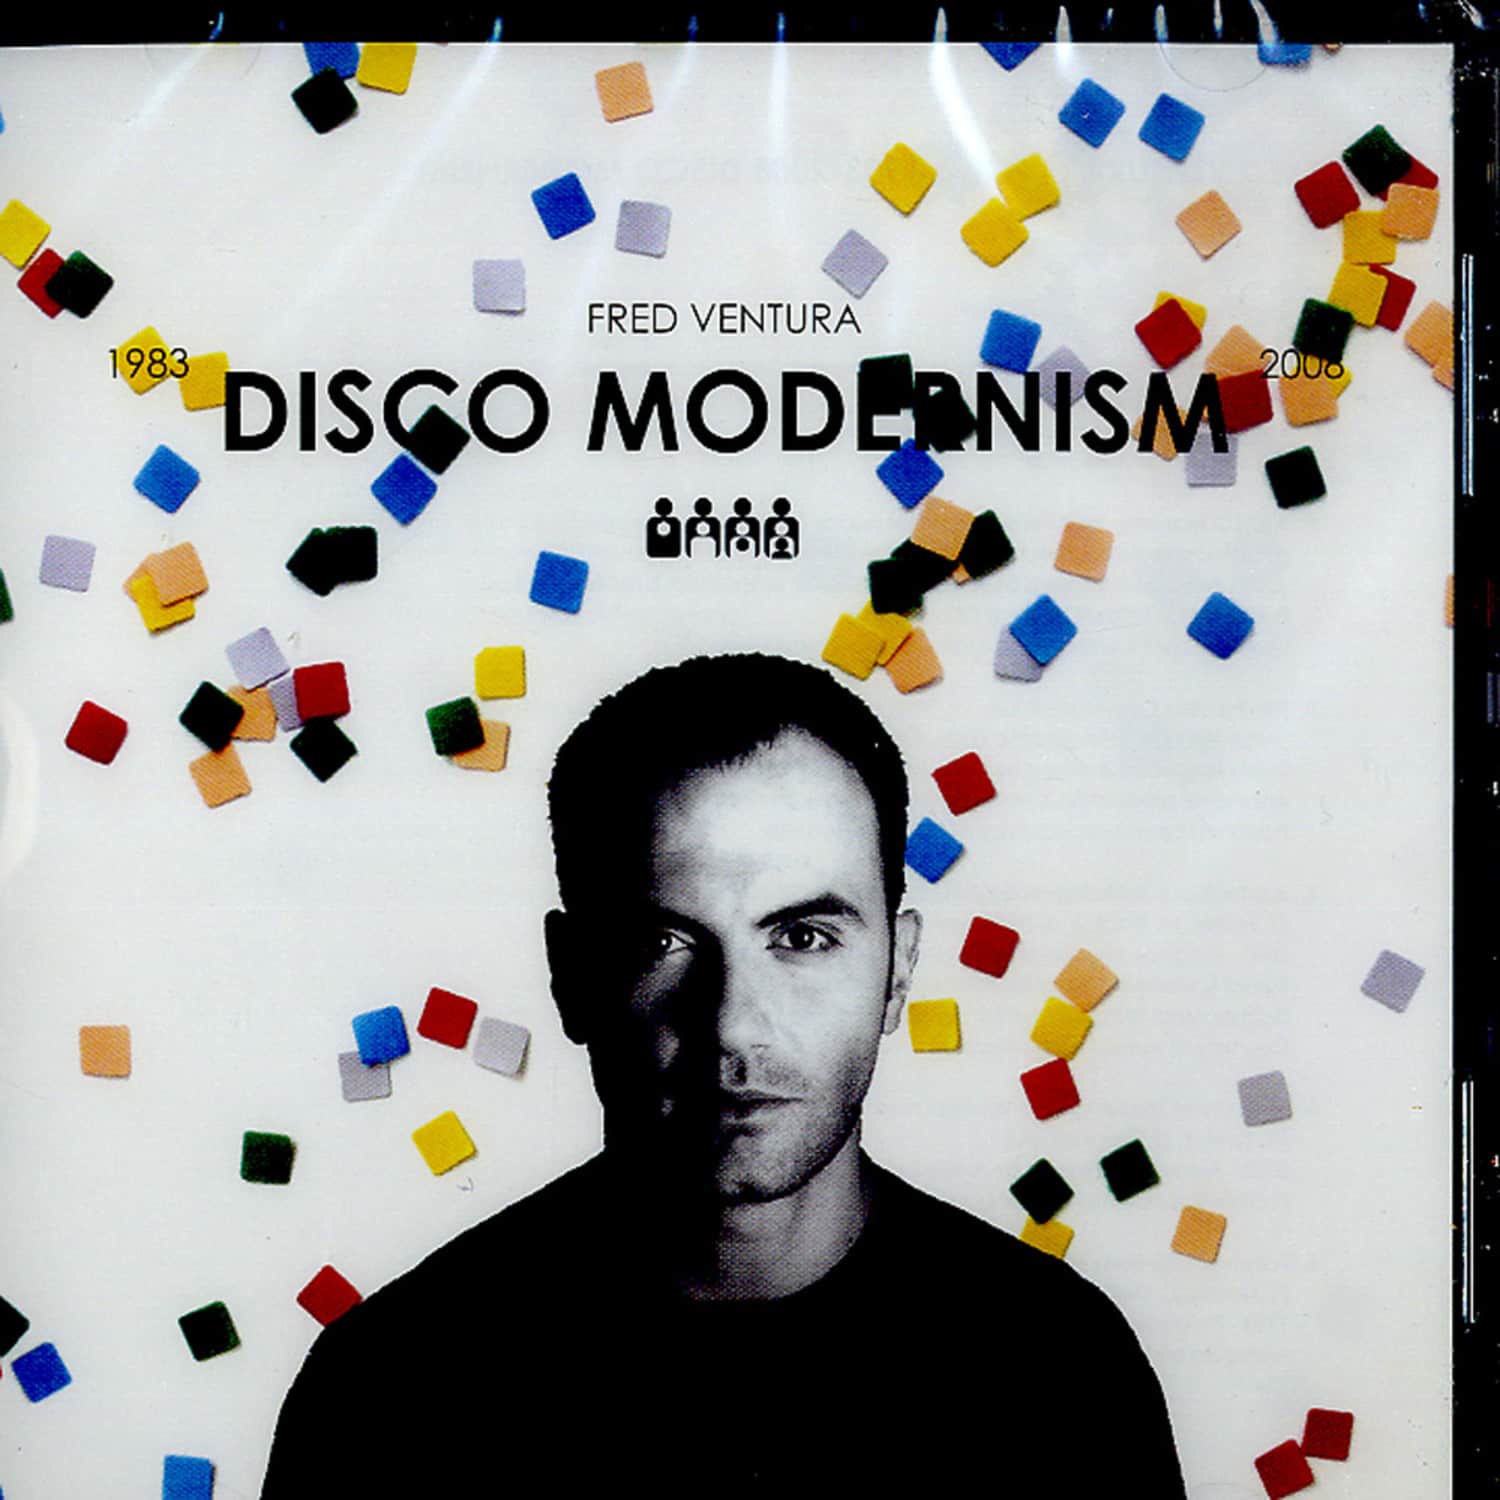 Fred Ventura - 1983 - 2008 DISCO MODERNISM 